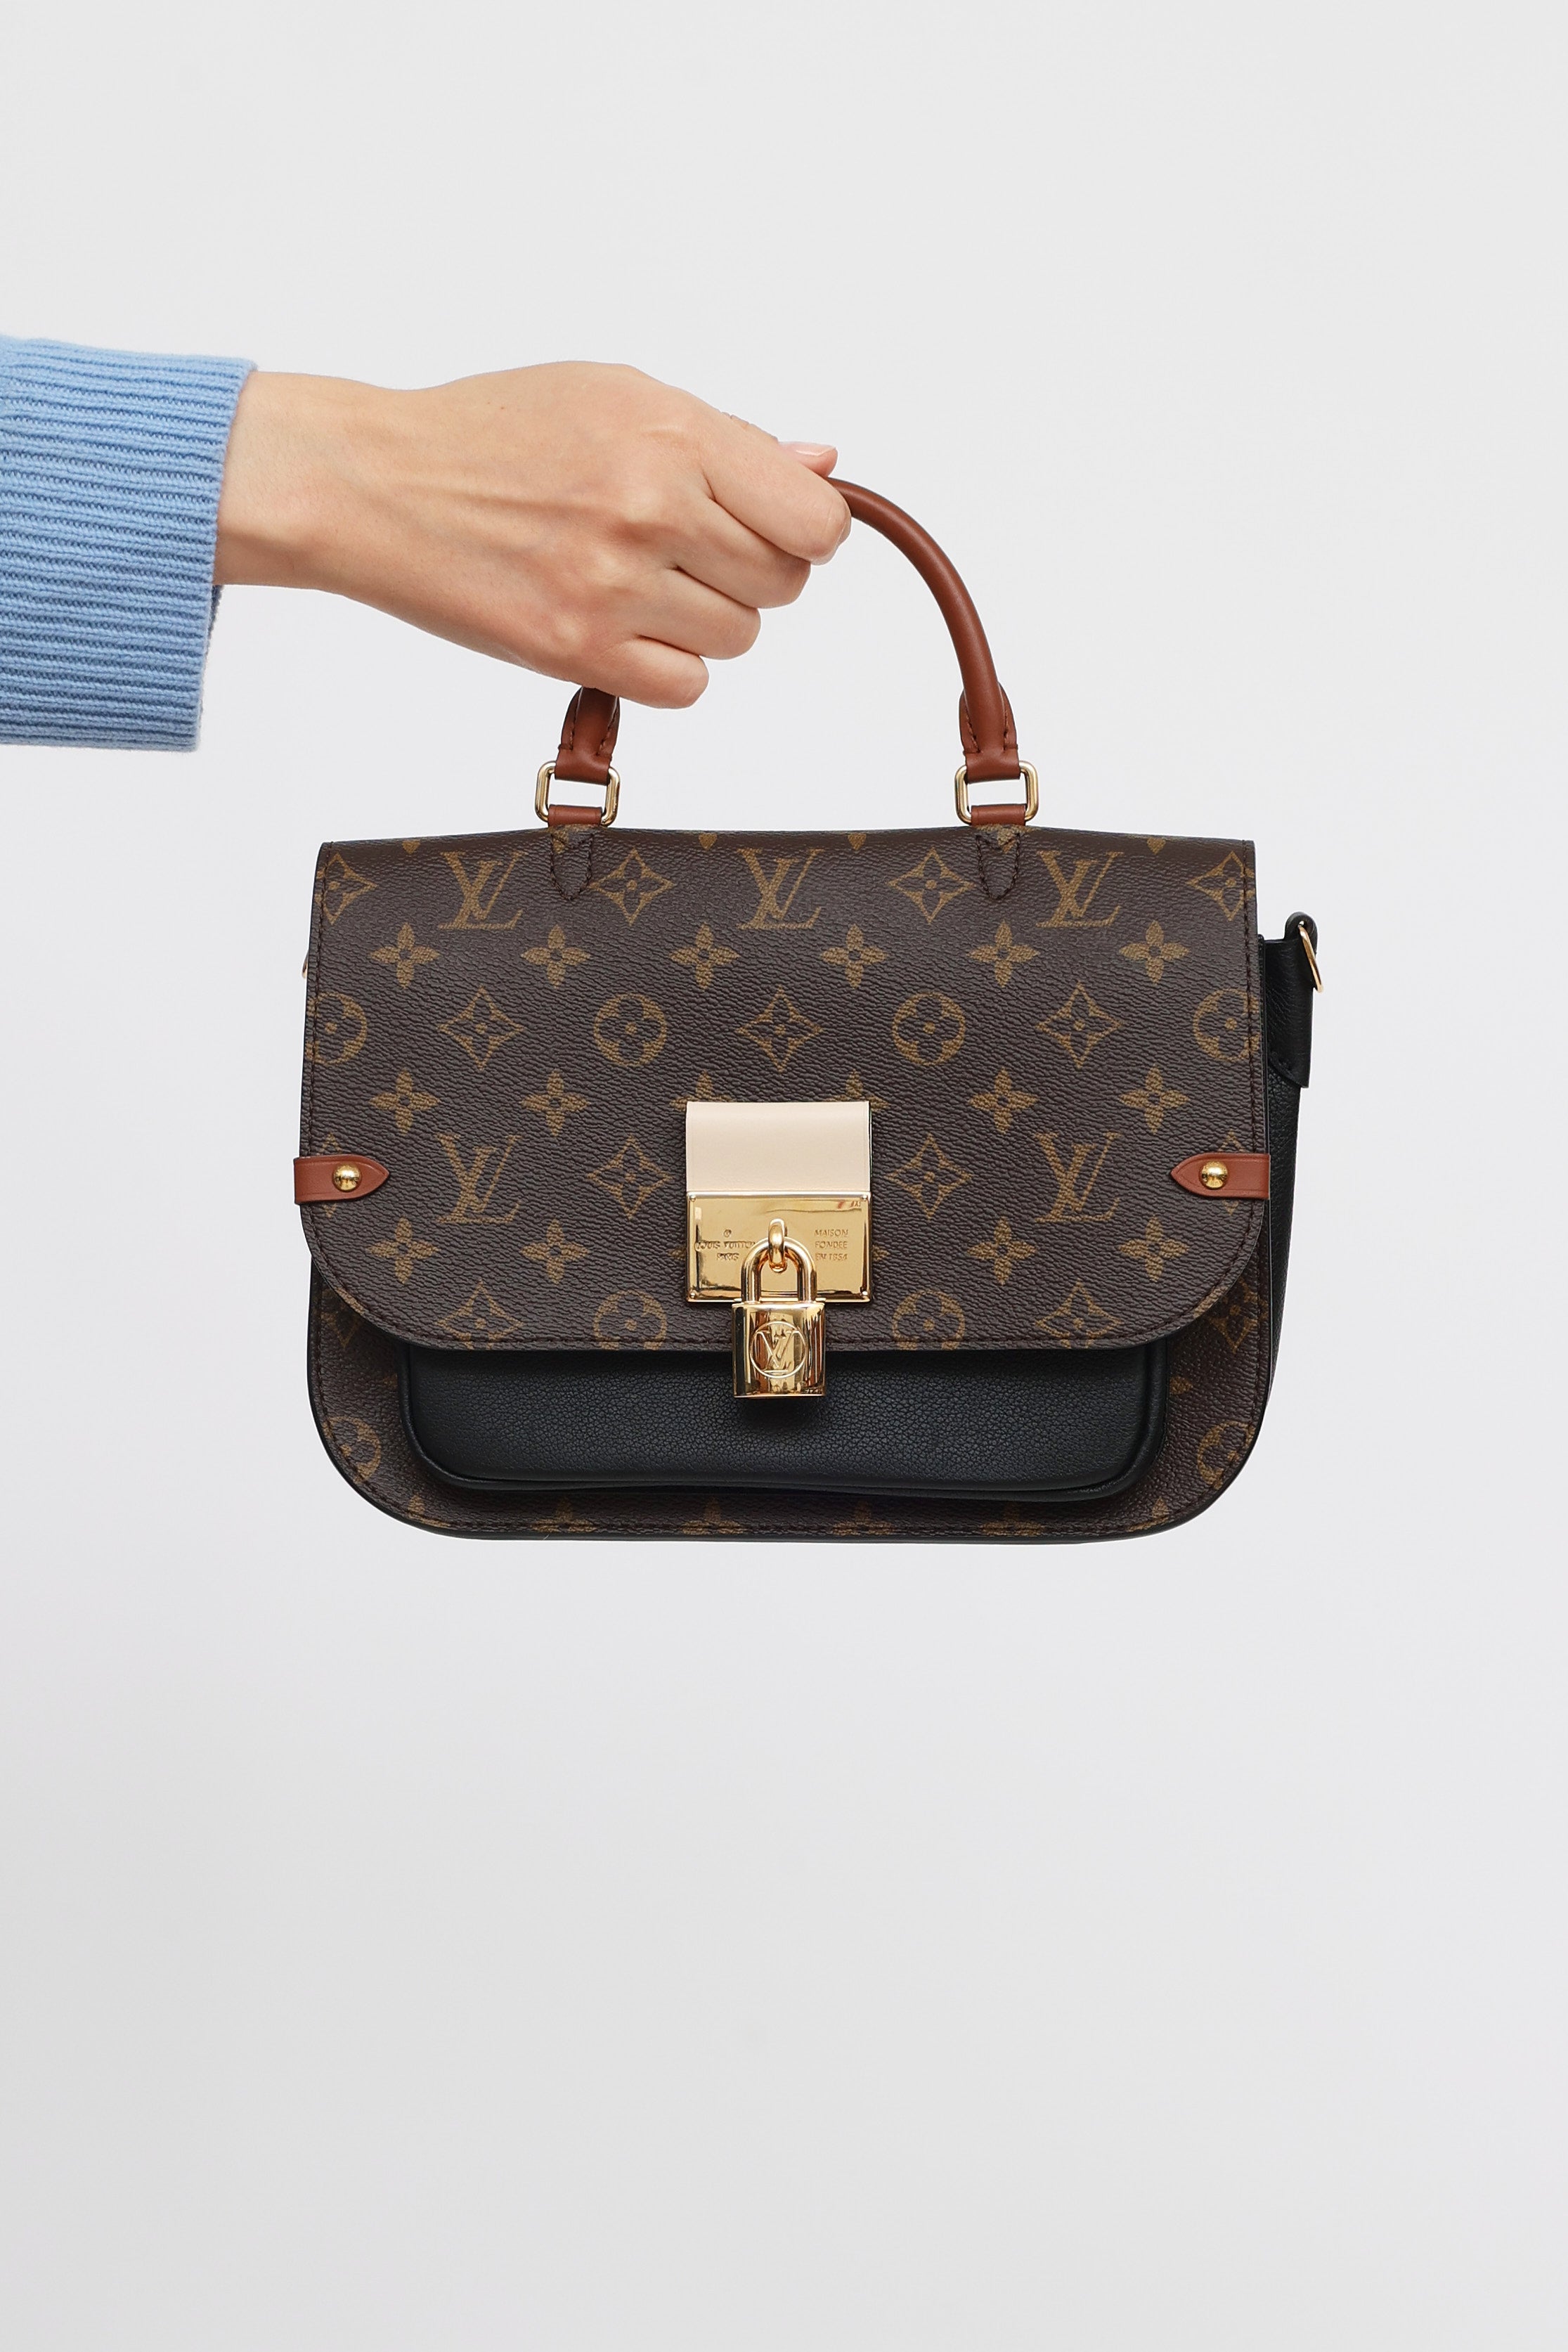 Louis Vuitton Authenticated Vaugirard Handbag